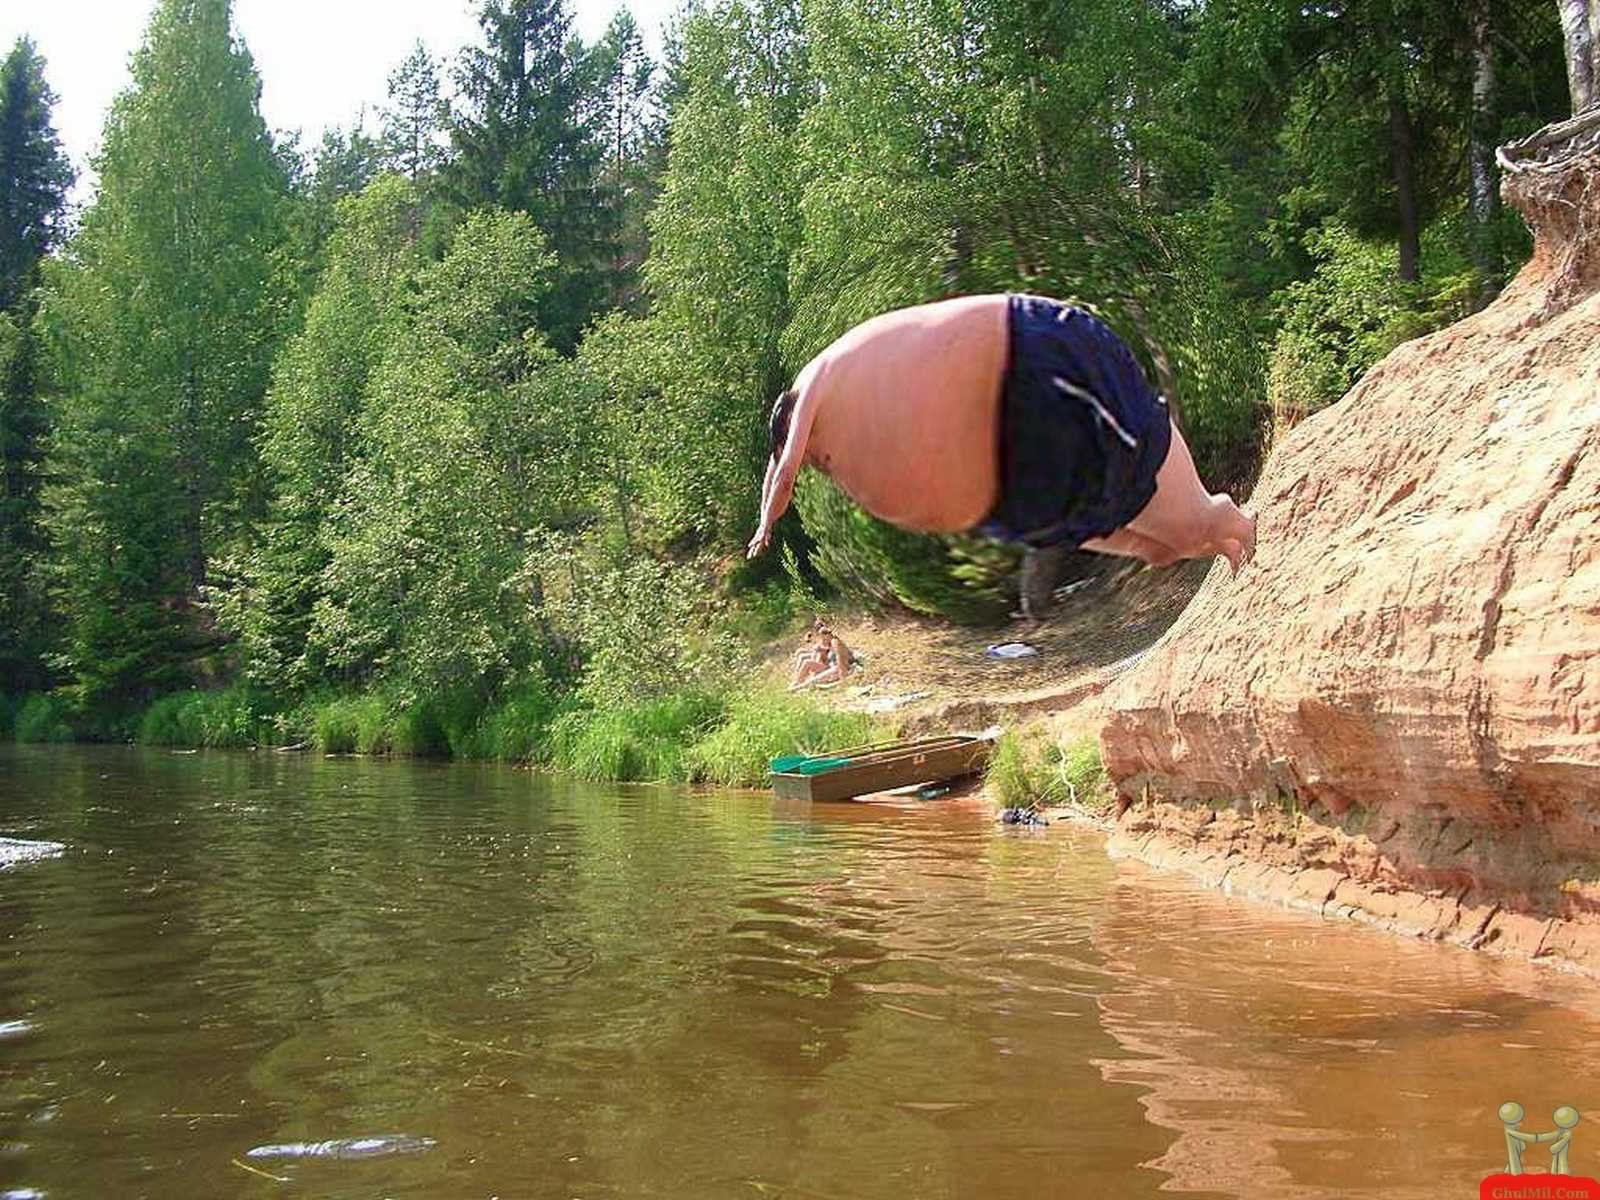 Funny Sumo Wrestler Dangerous Jumping In River